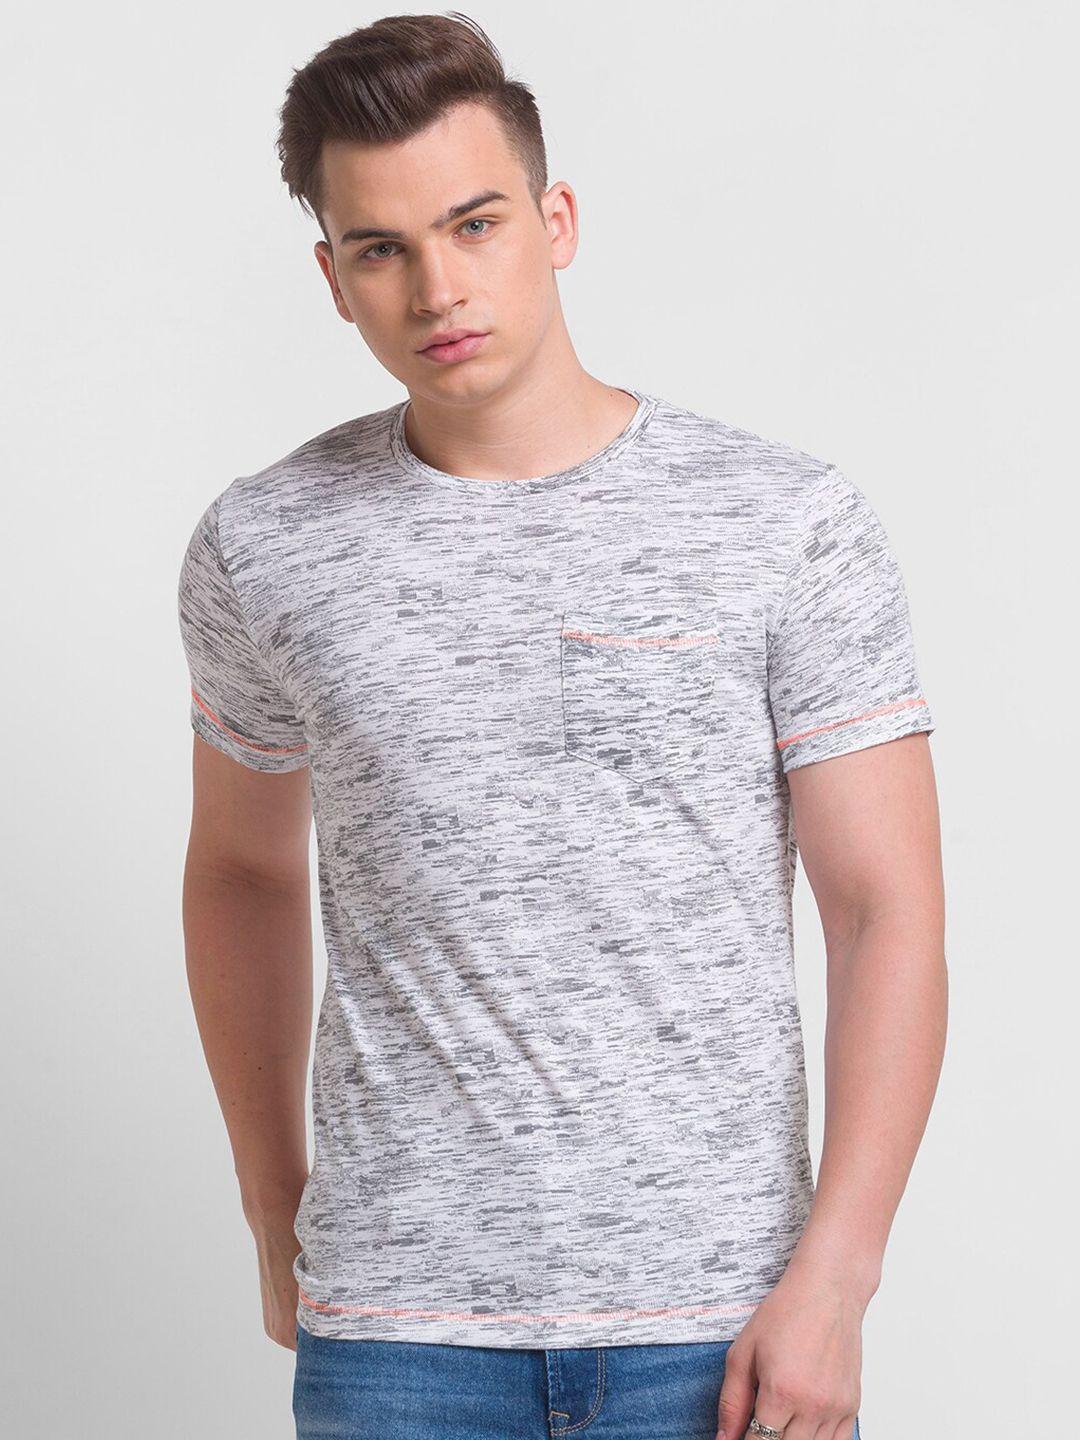 globus-men-white-&-grey-slim-fit-printed-cotton-t-shirt